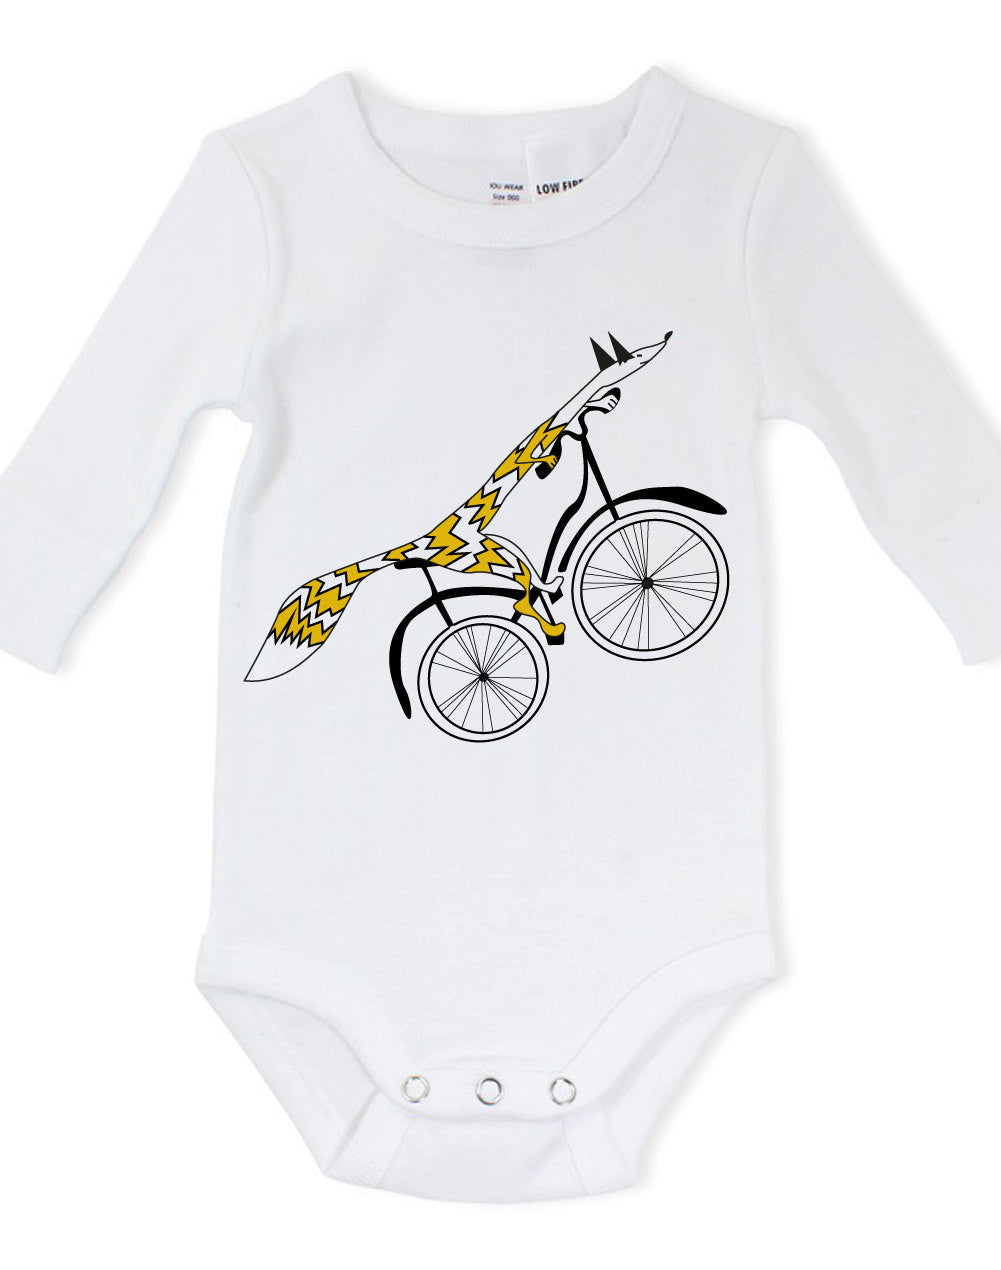 Fox bike baby bodysuit for bike lover - ARTsy clothing - 1